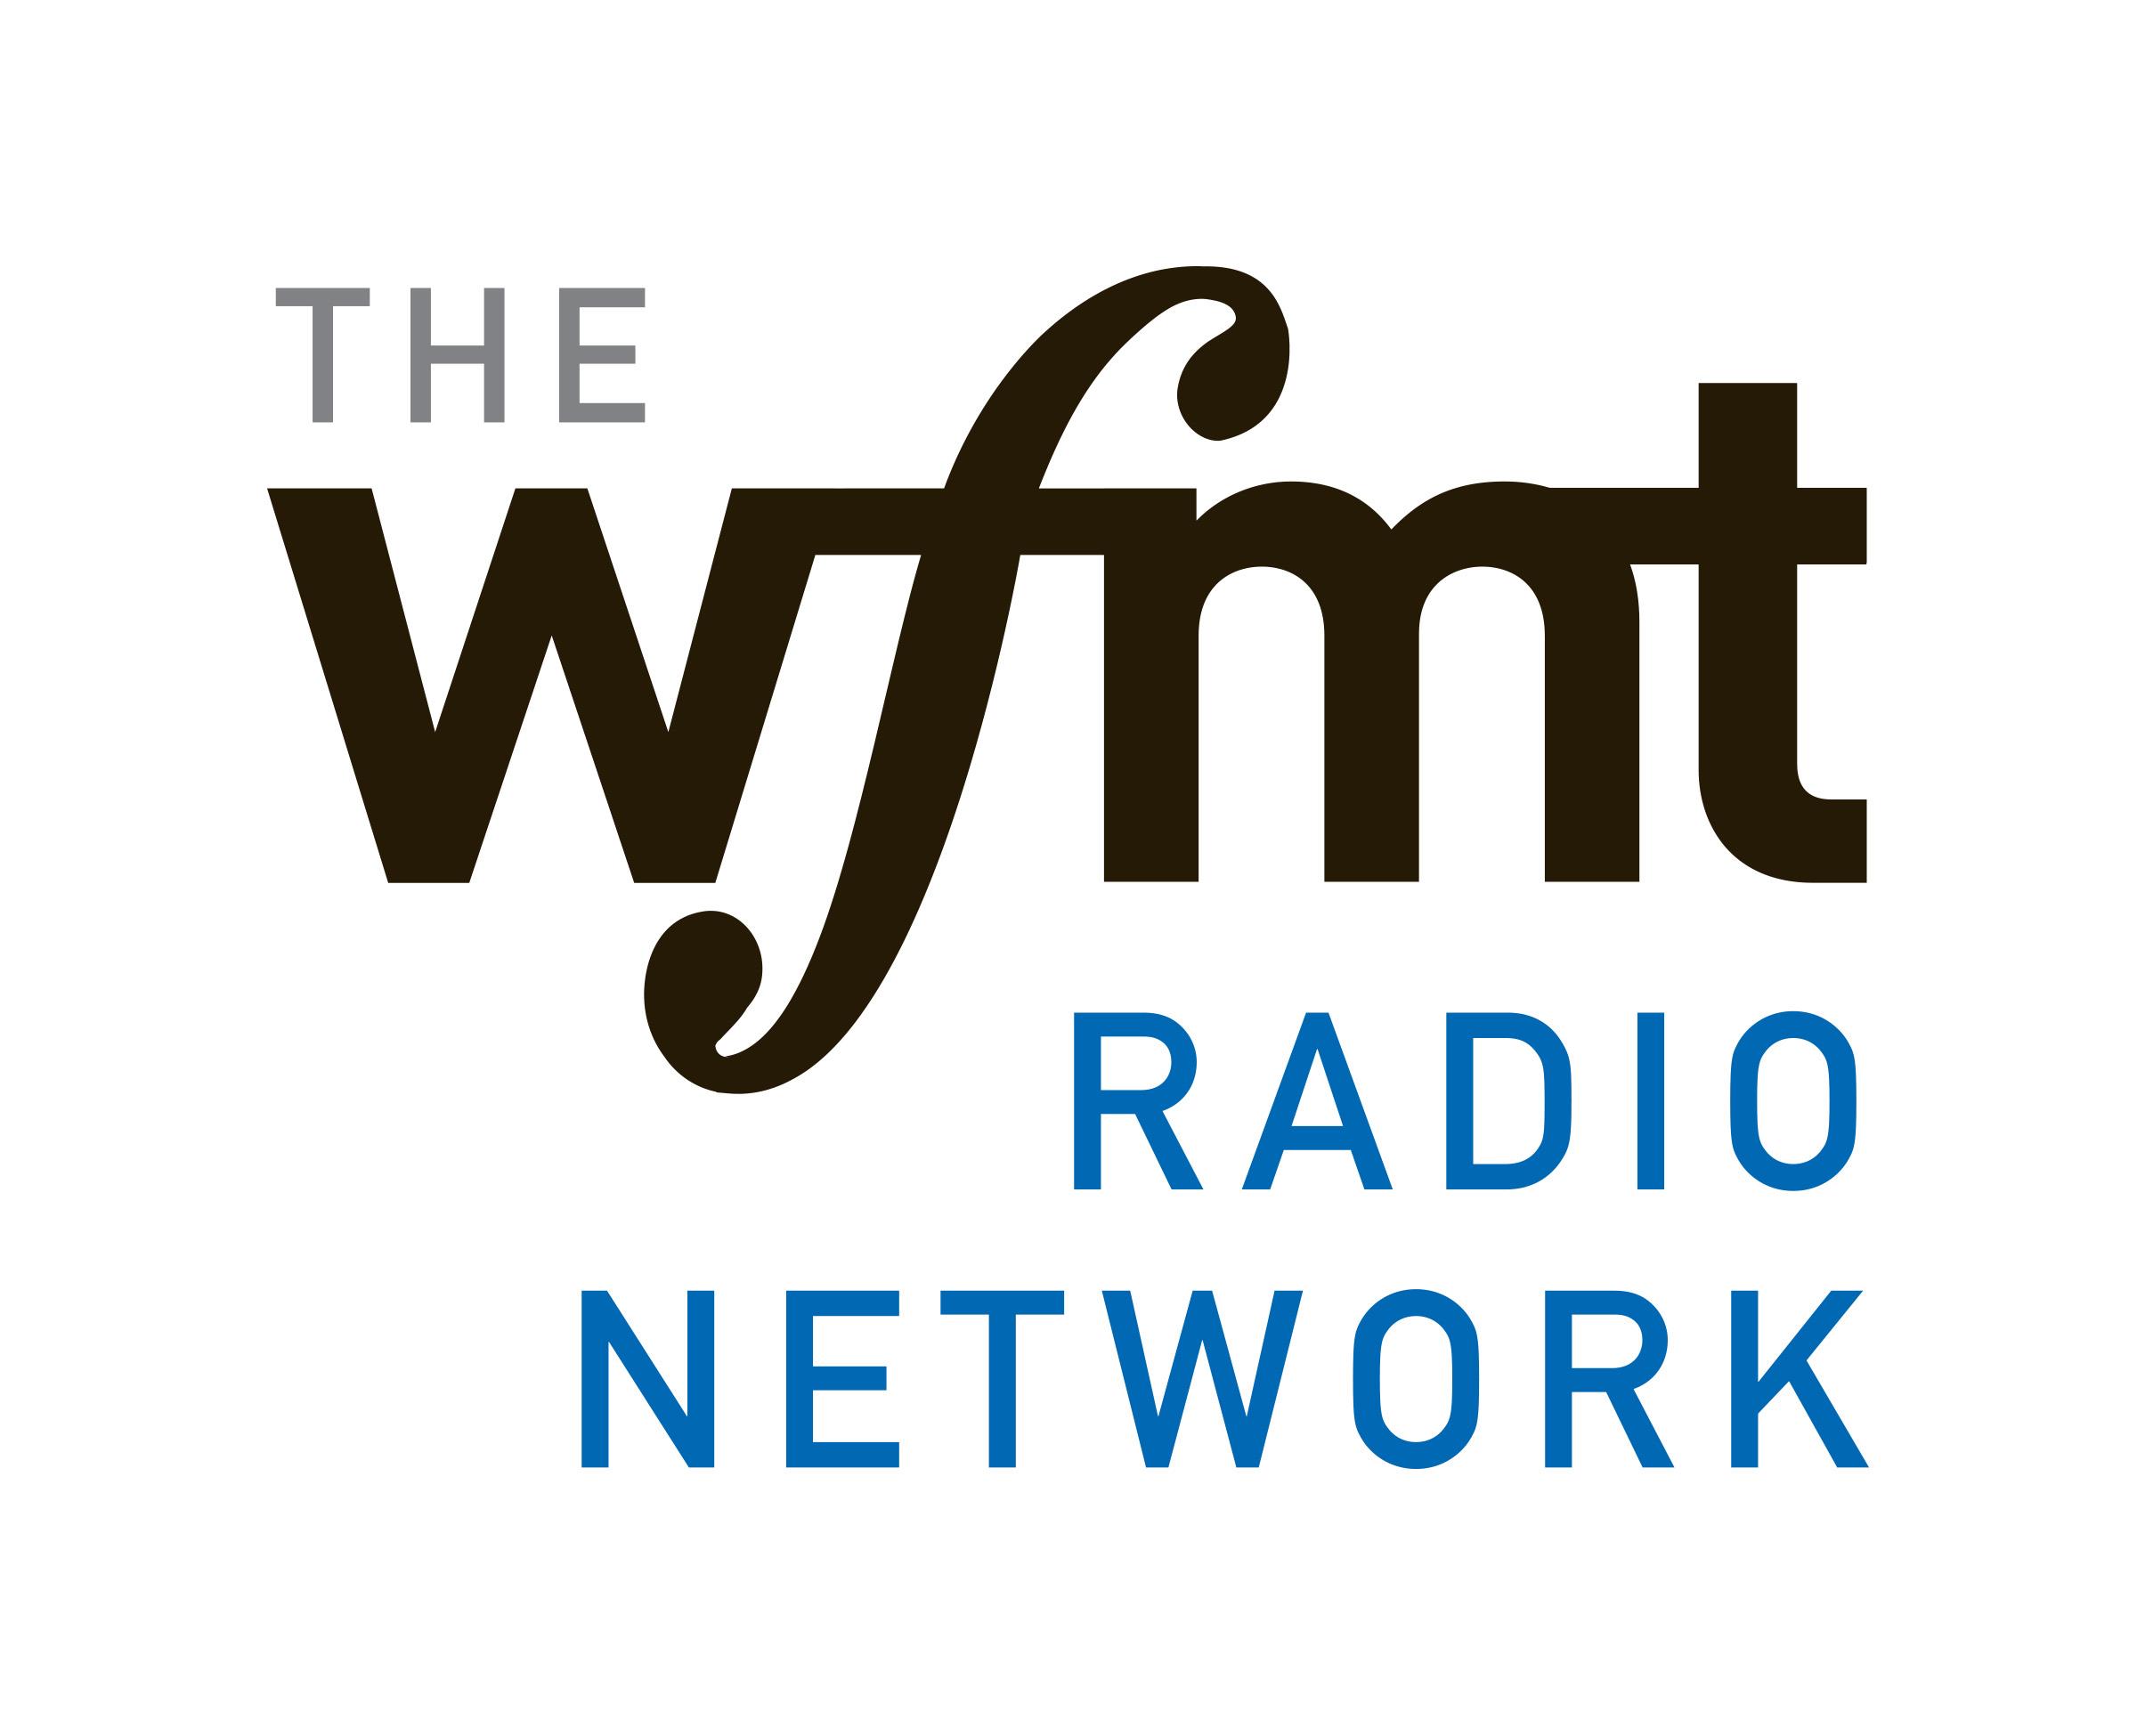 p:\radio networks\syndication\photos\logos\wfmt\wfmt radio network official logos\wfmt_radio network logo_2c.jpg